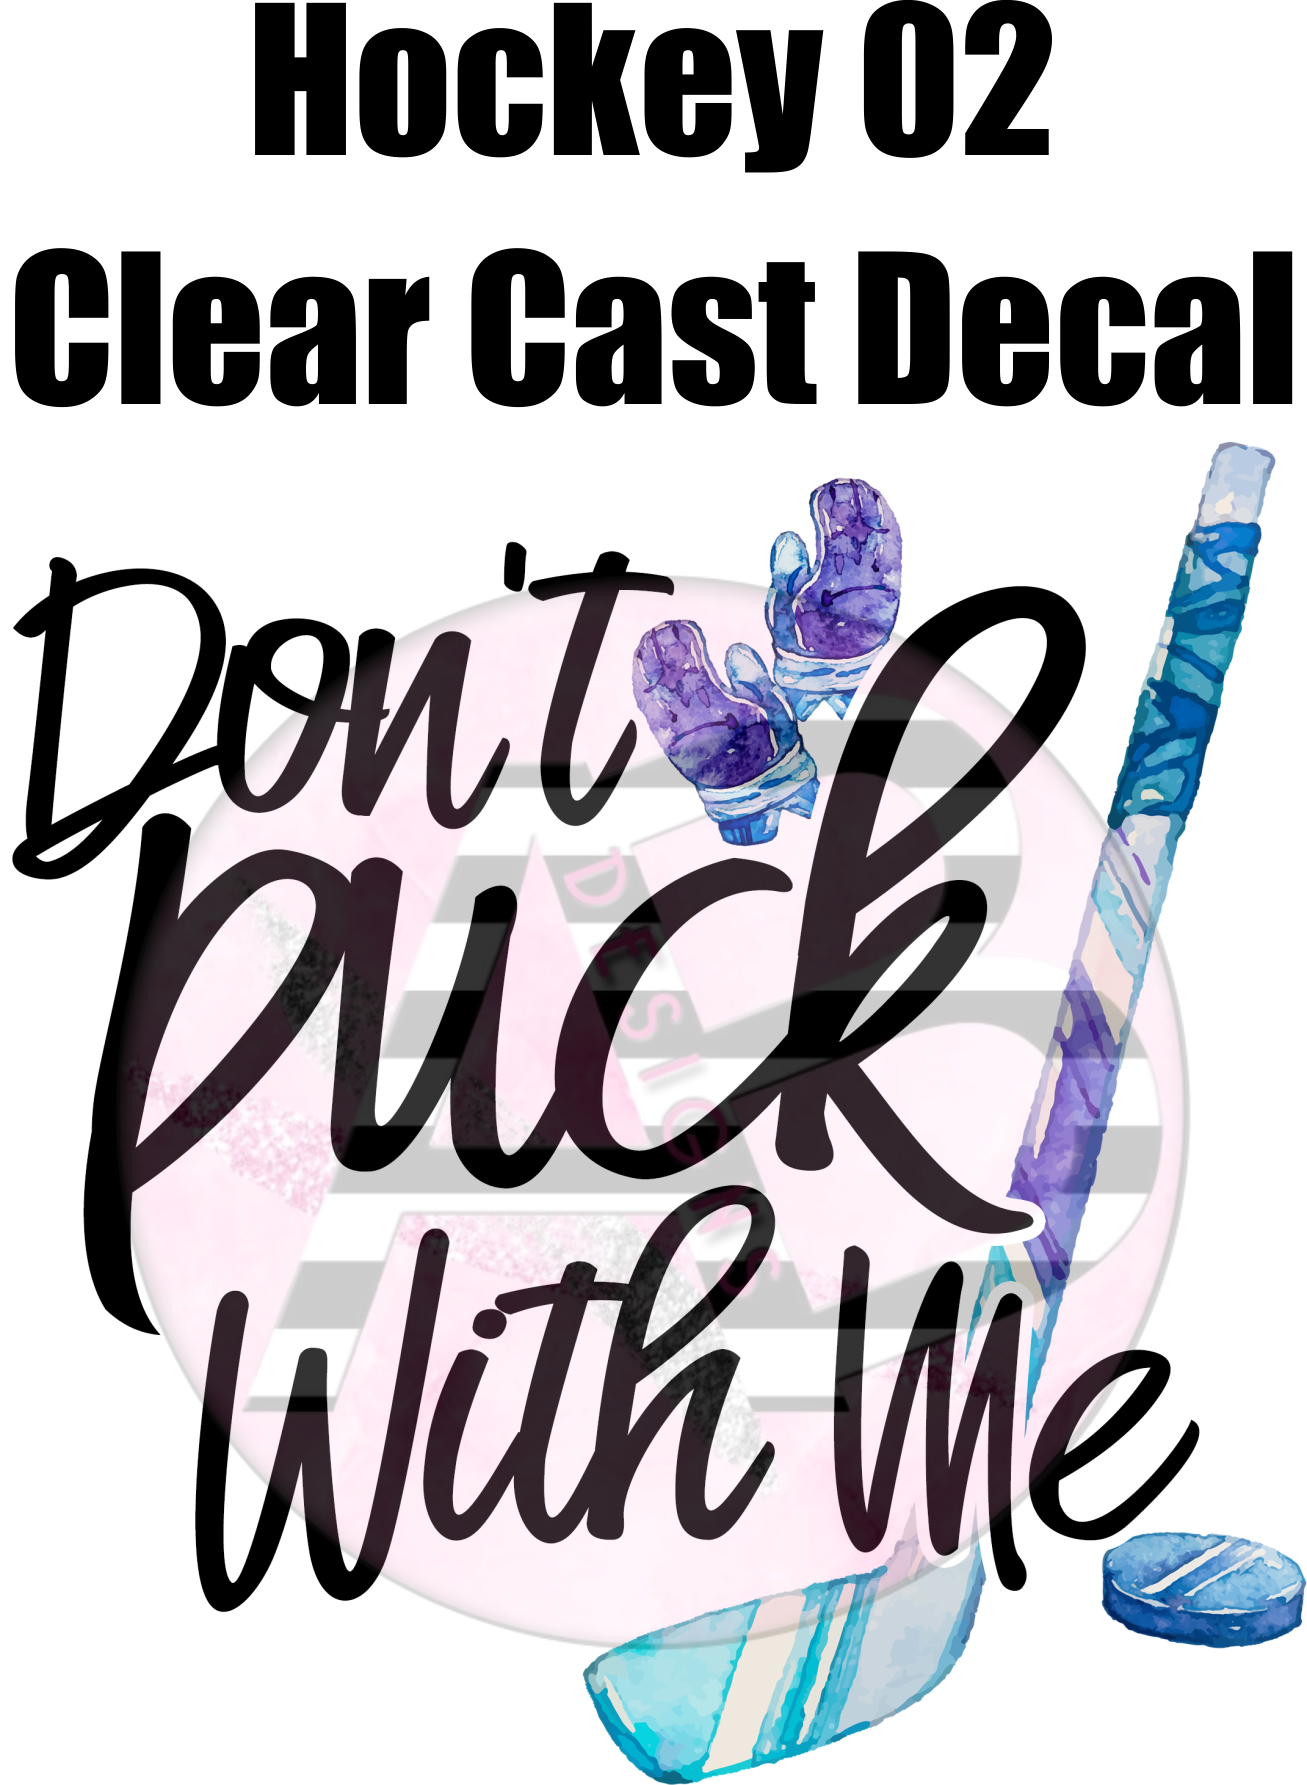 Hockey 02 - Clear Cast Decal